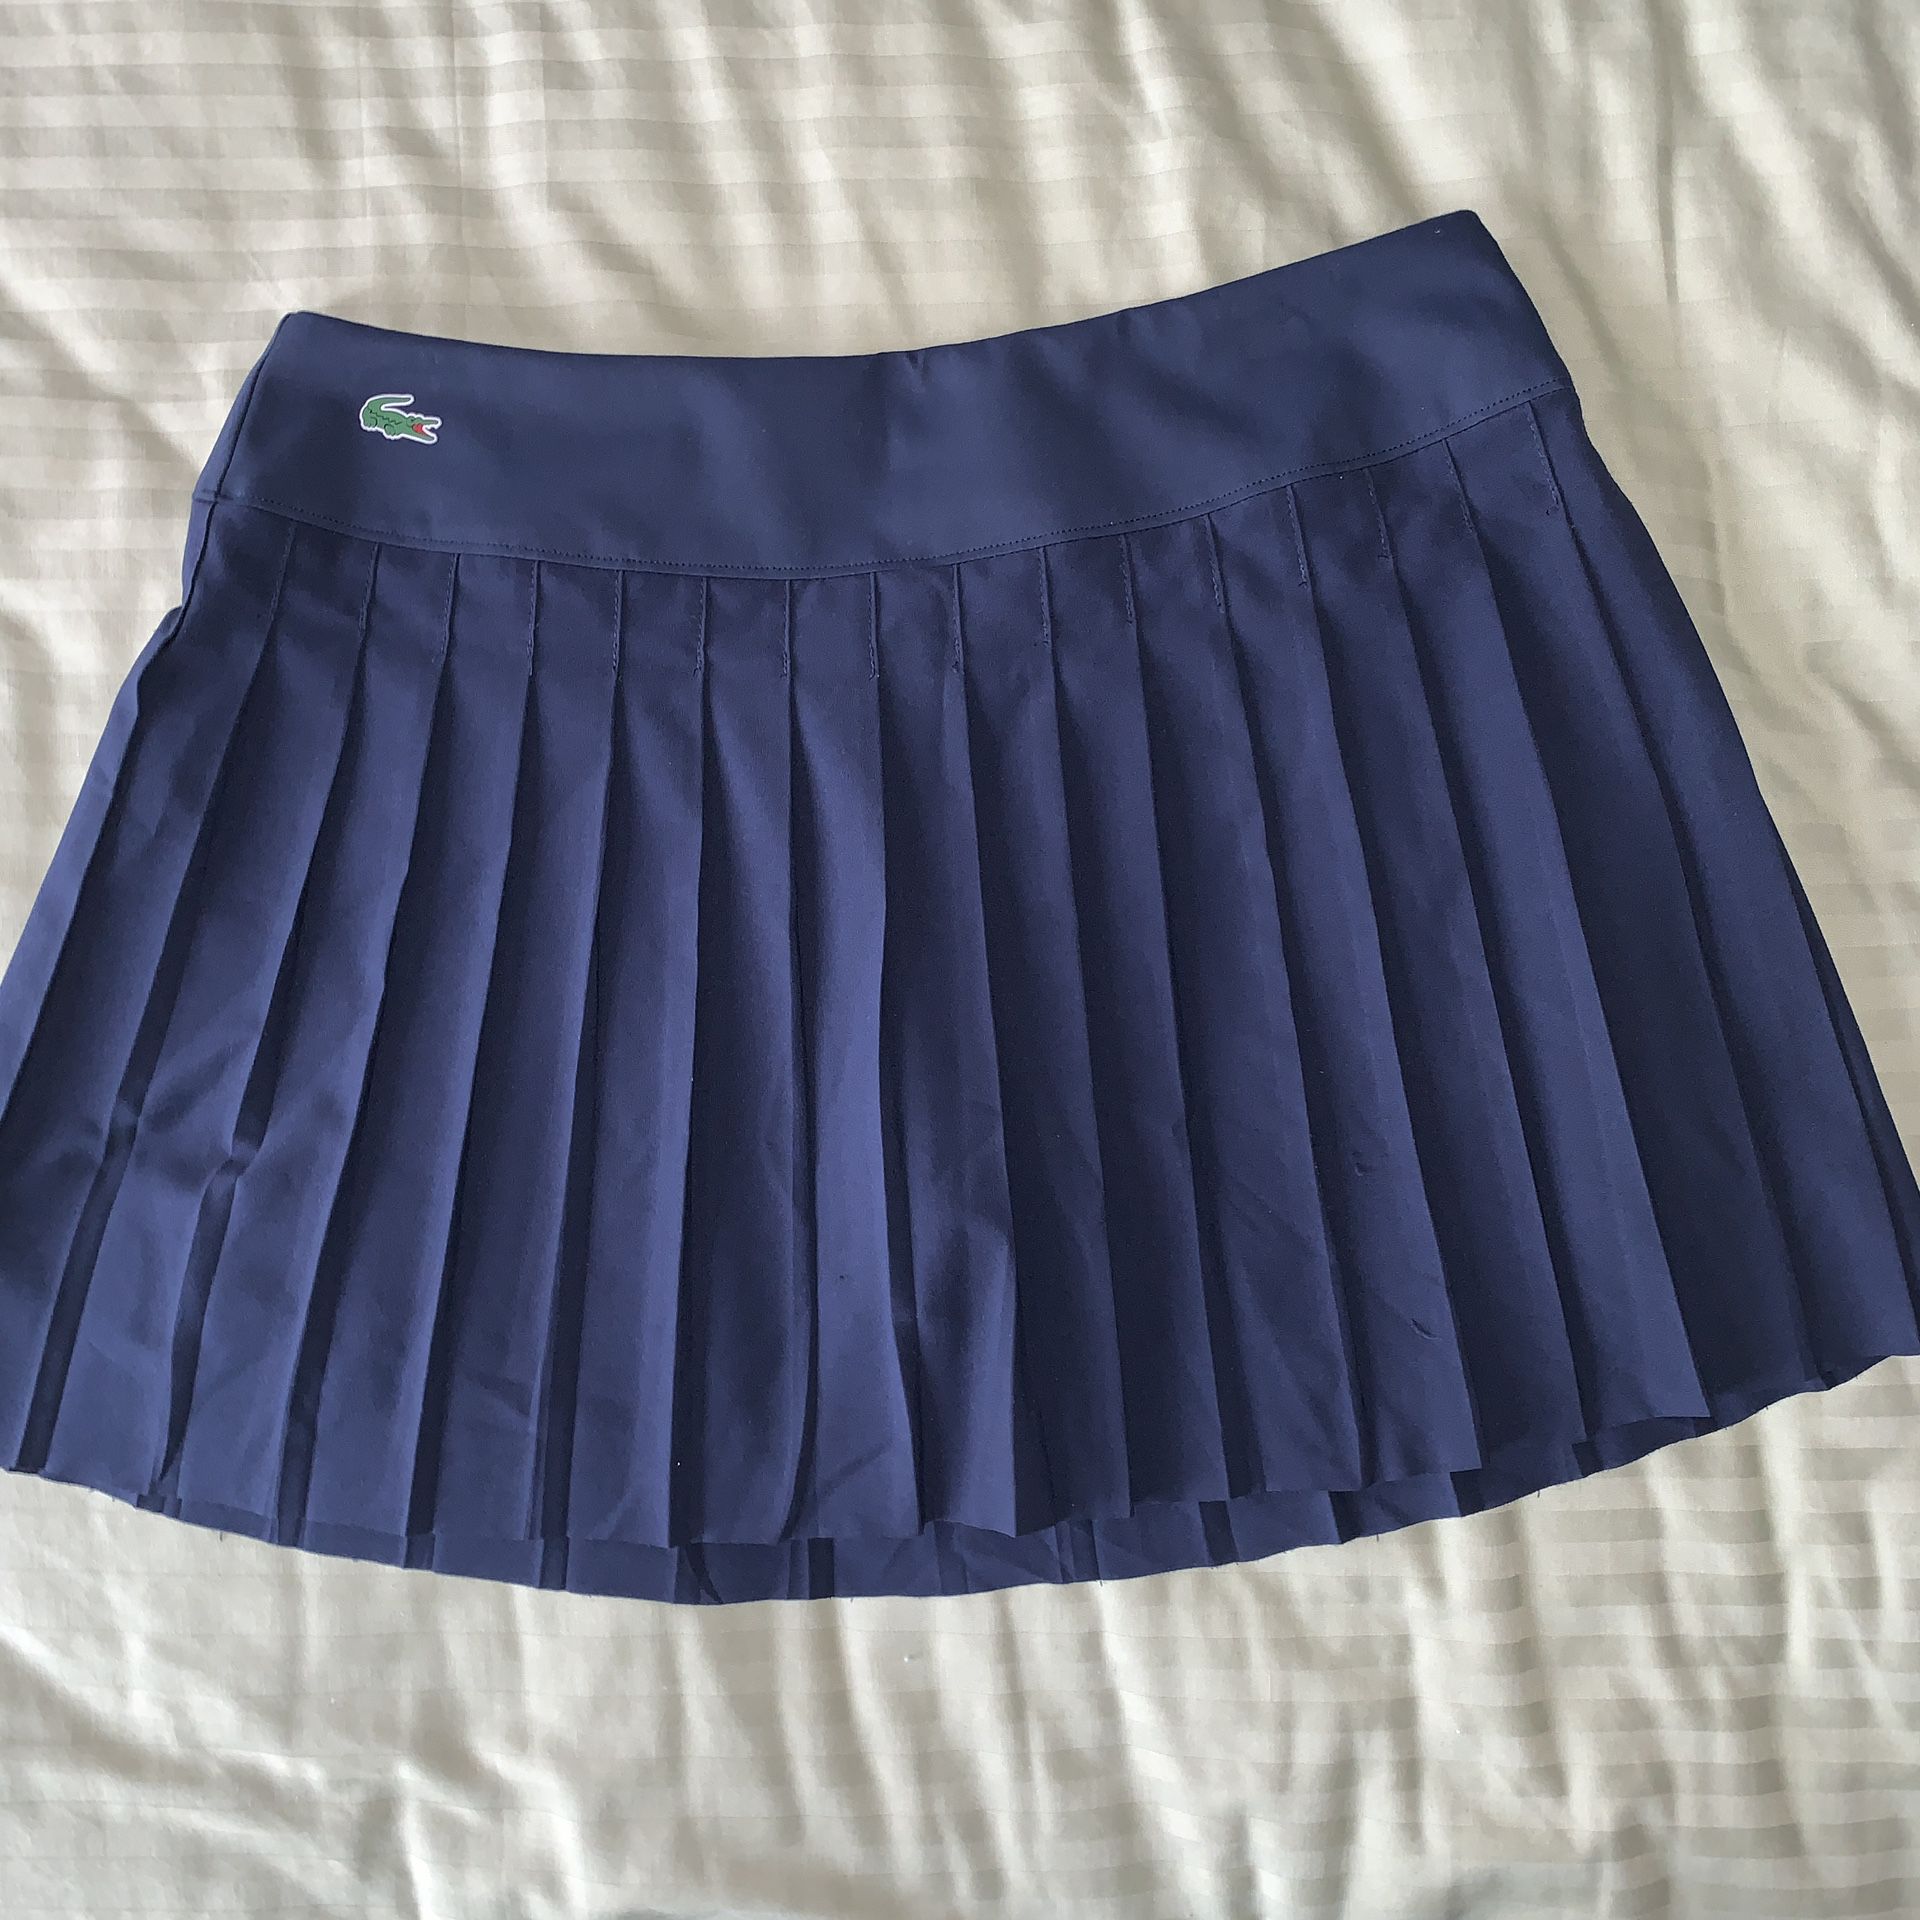 Lacoste tennis skirt (navy)